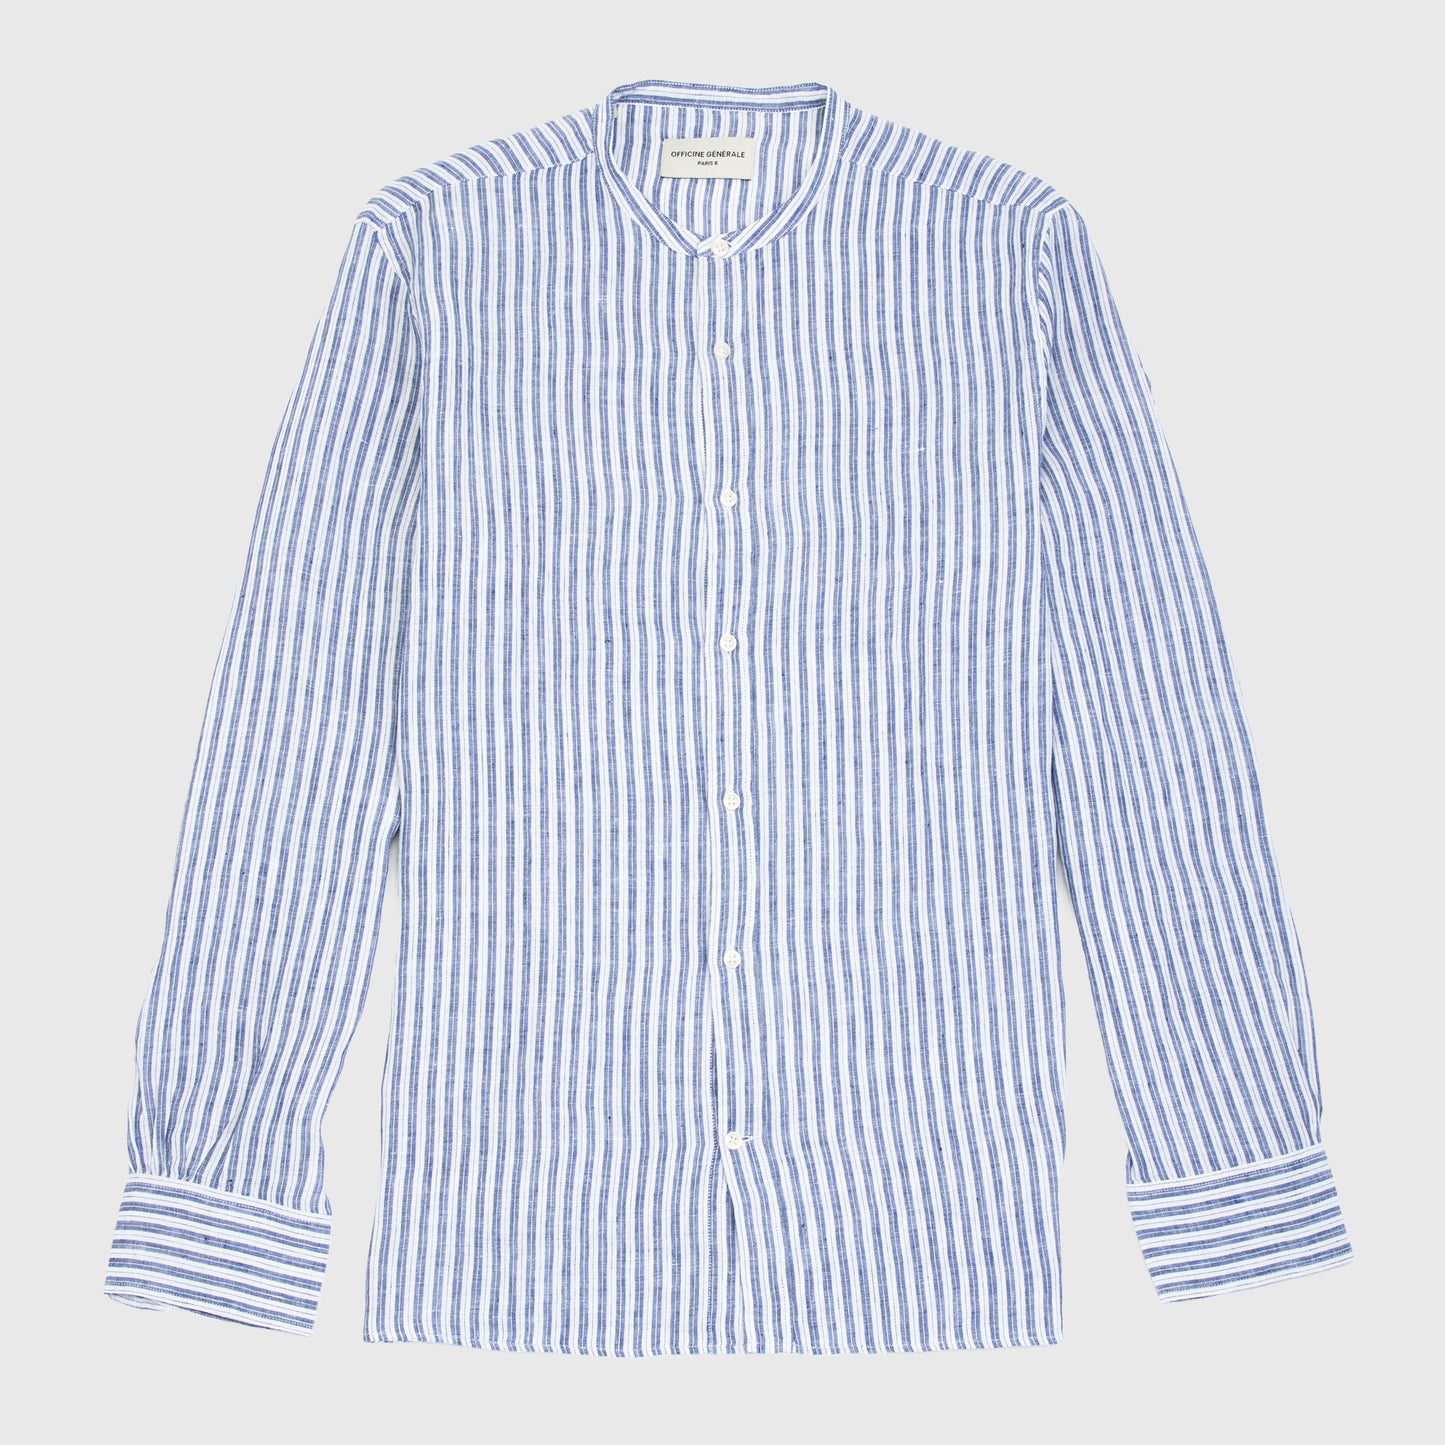 GASTON Striped Shirt Italian Linen Hemp Dark Navy/White